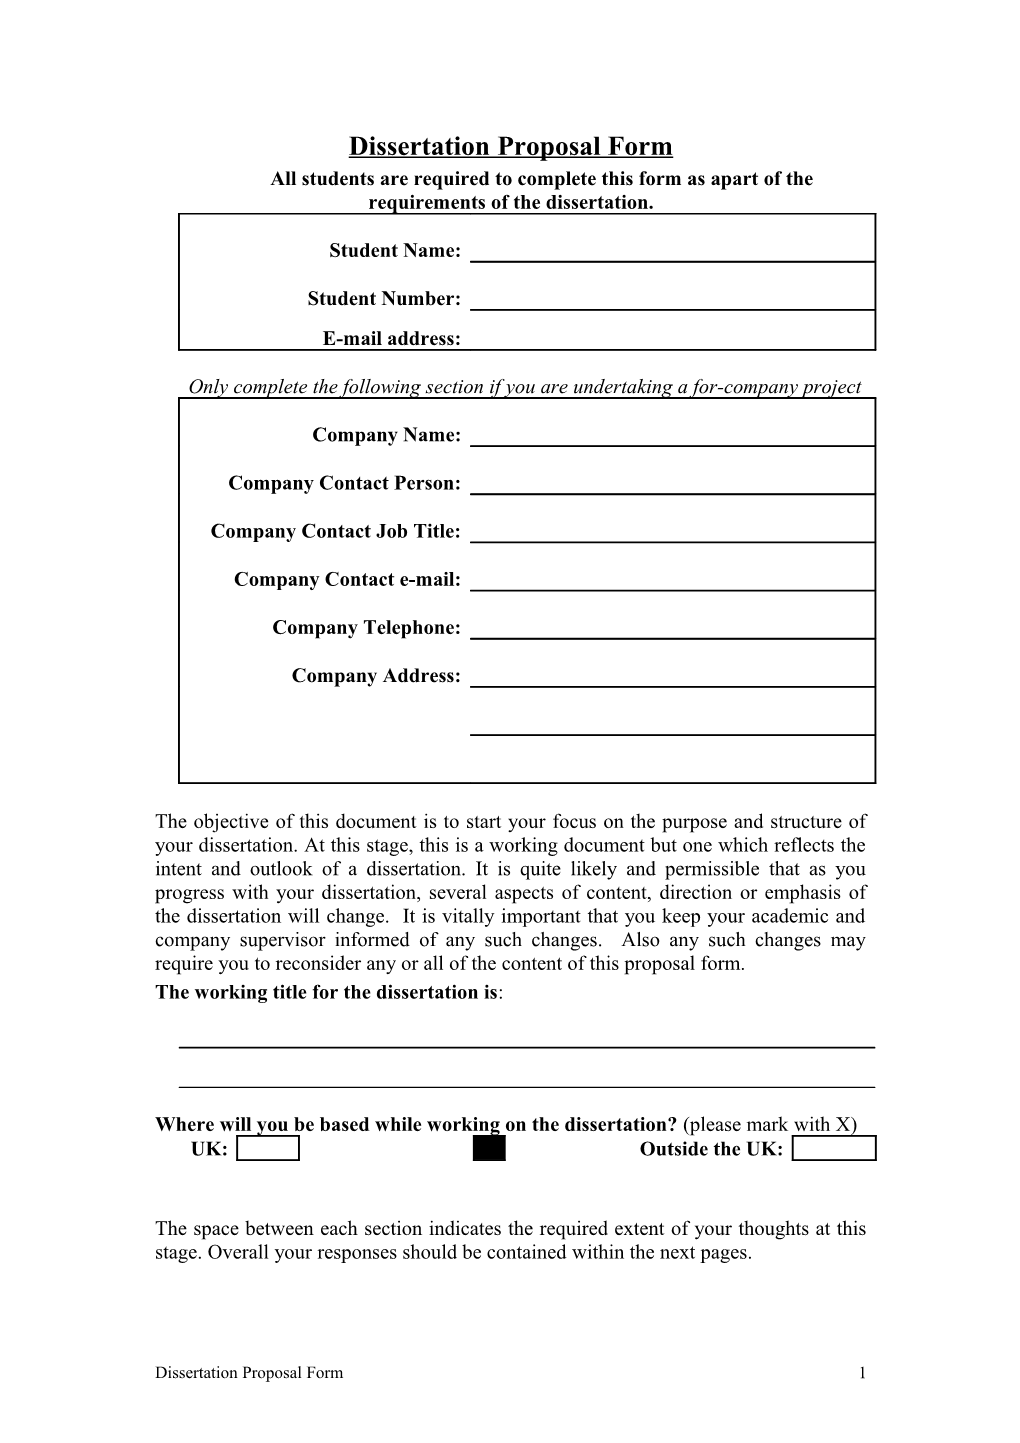 Dissertation Proposal Form